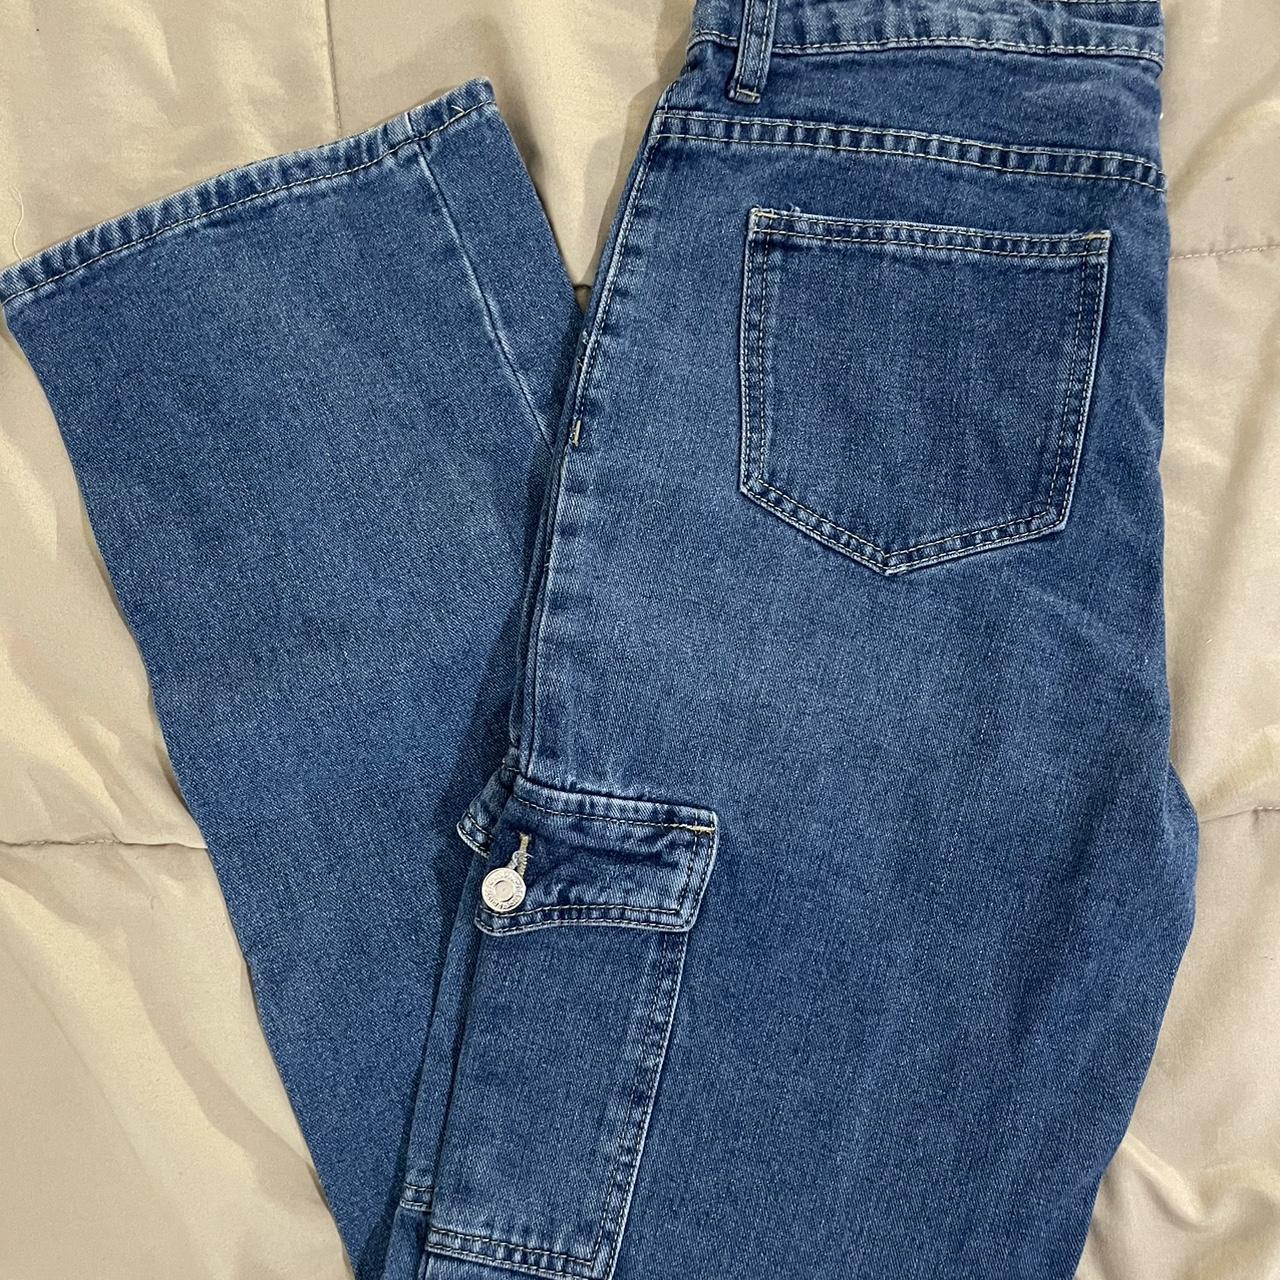 Blue high waisted jeans - Depop